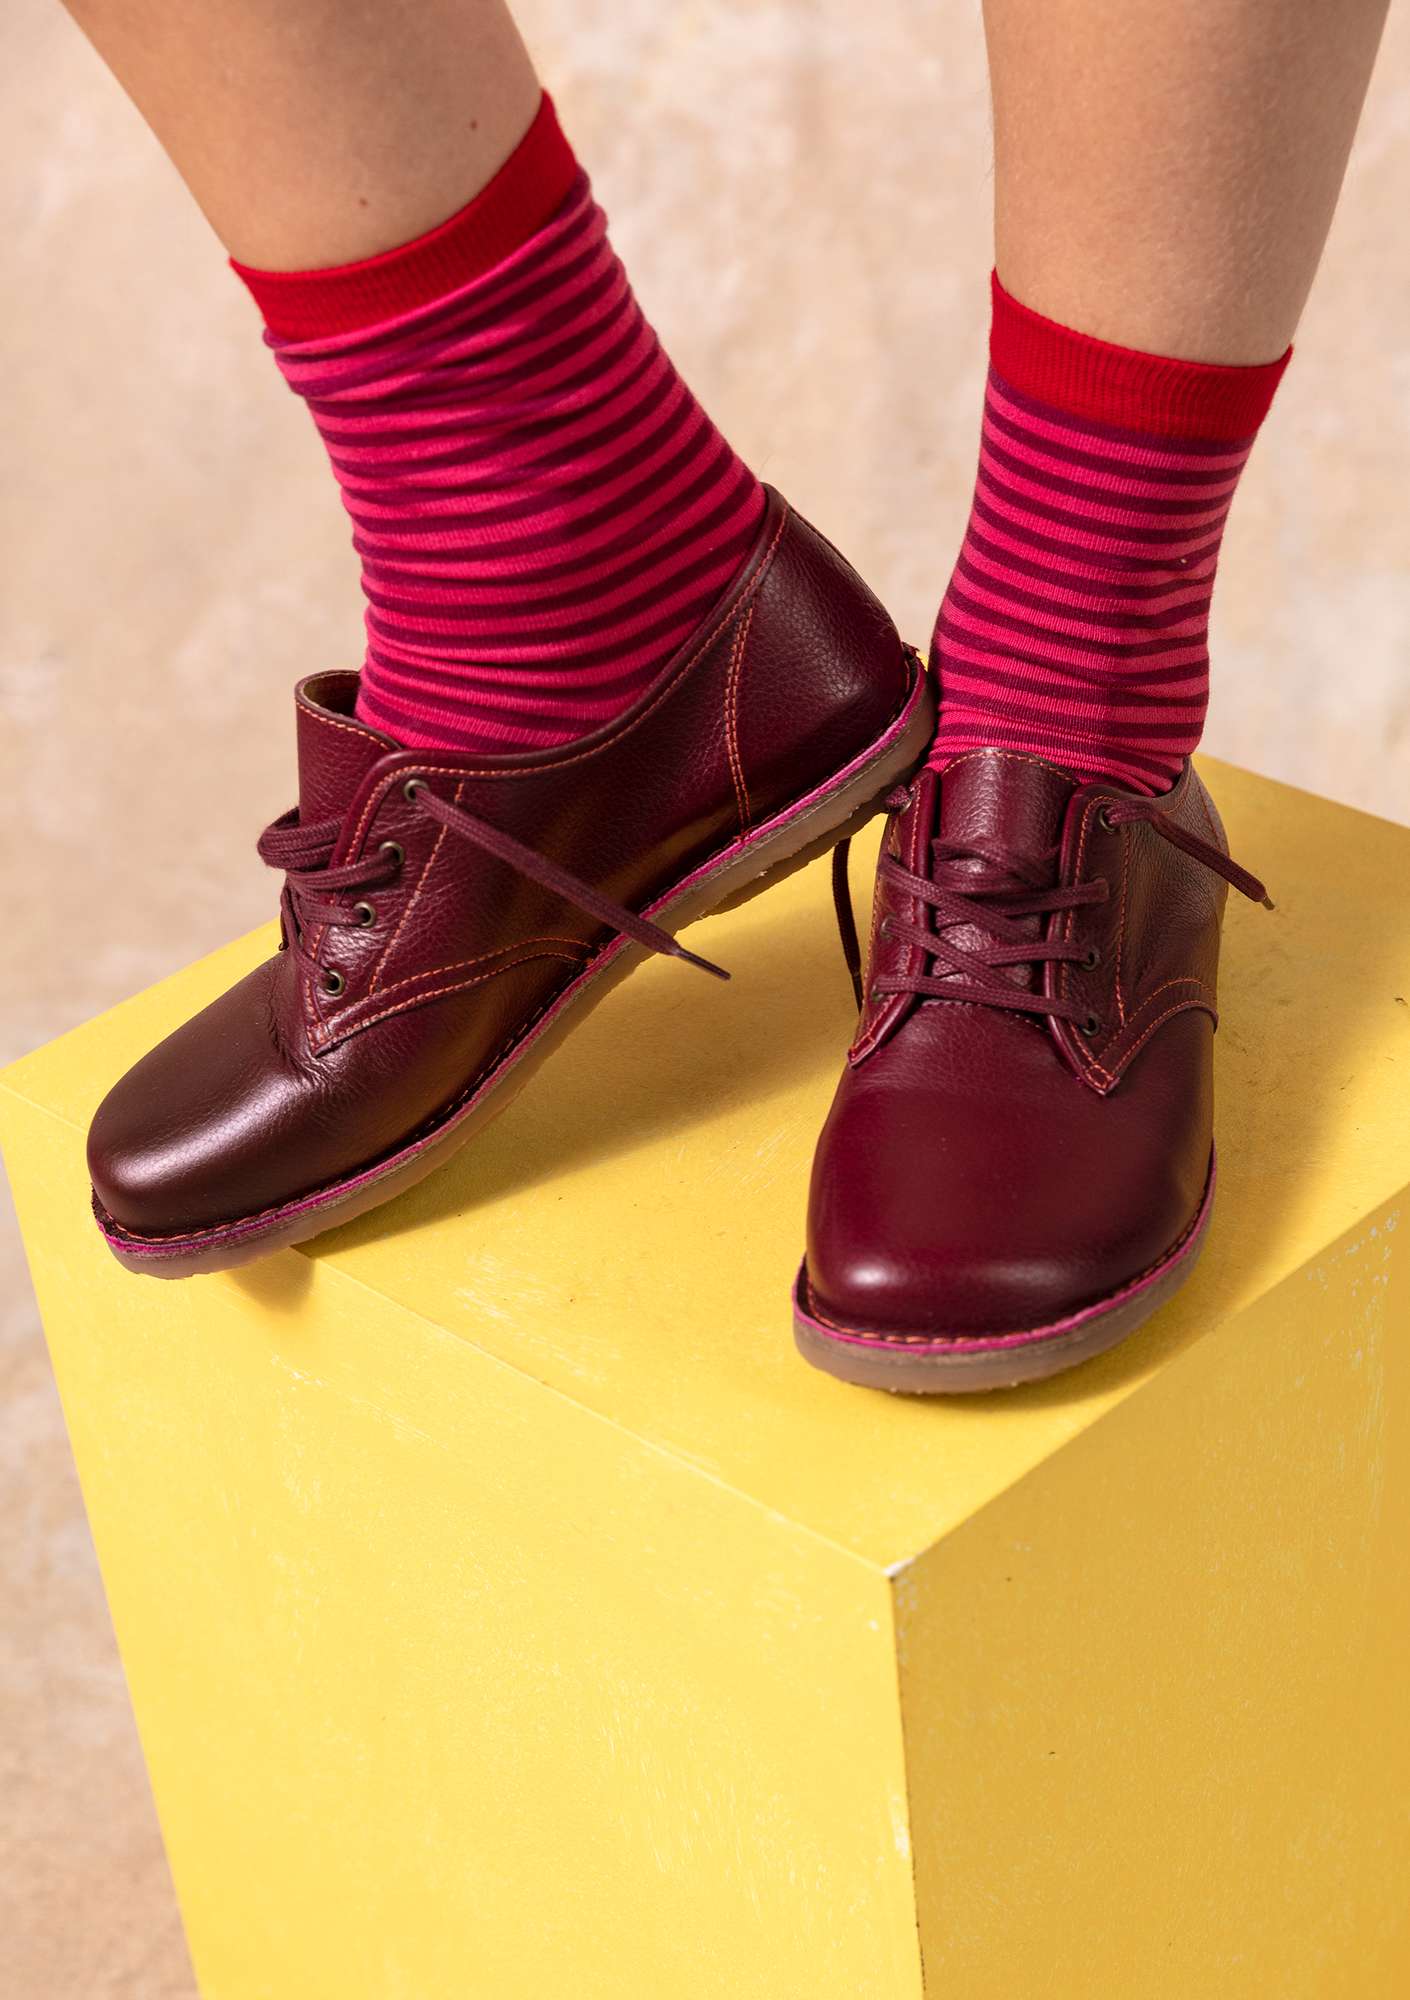 Chaussures de promenade purple red